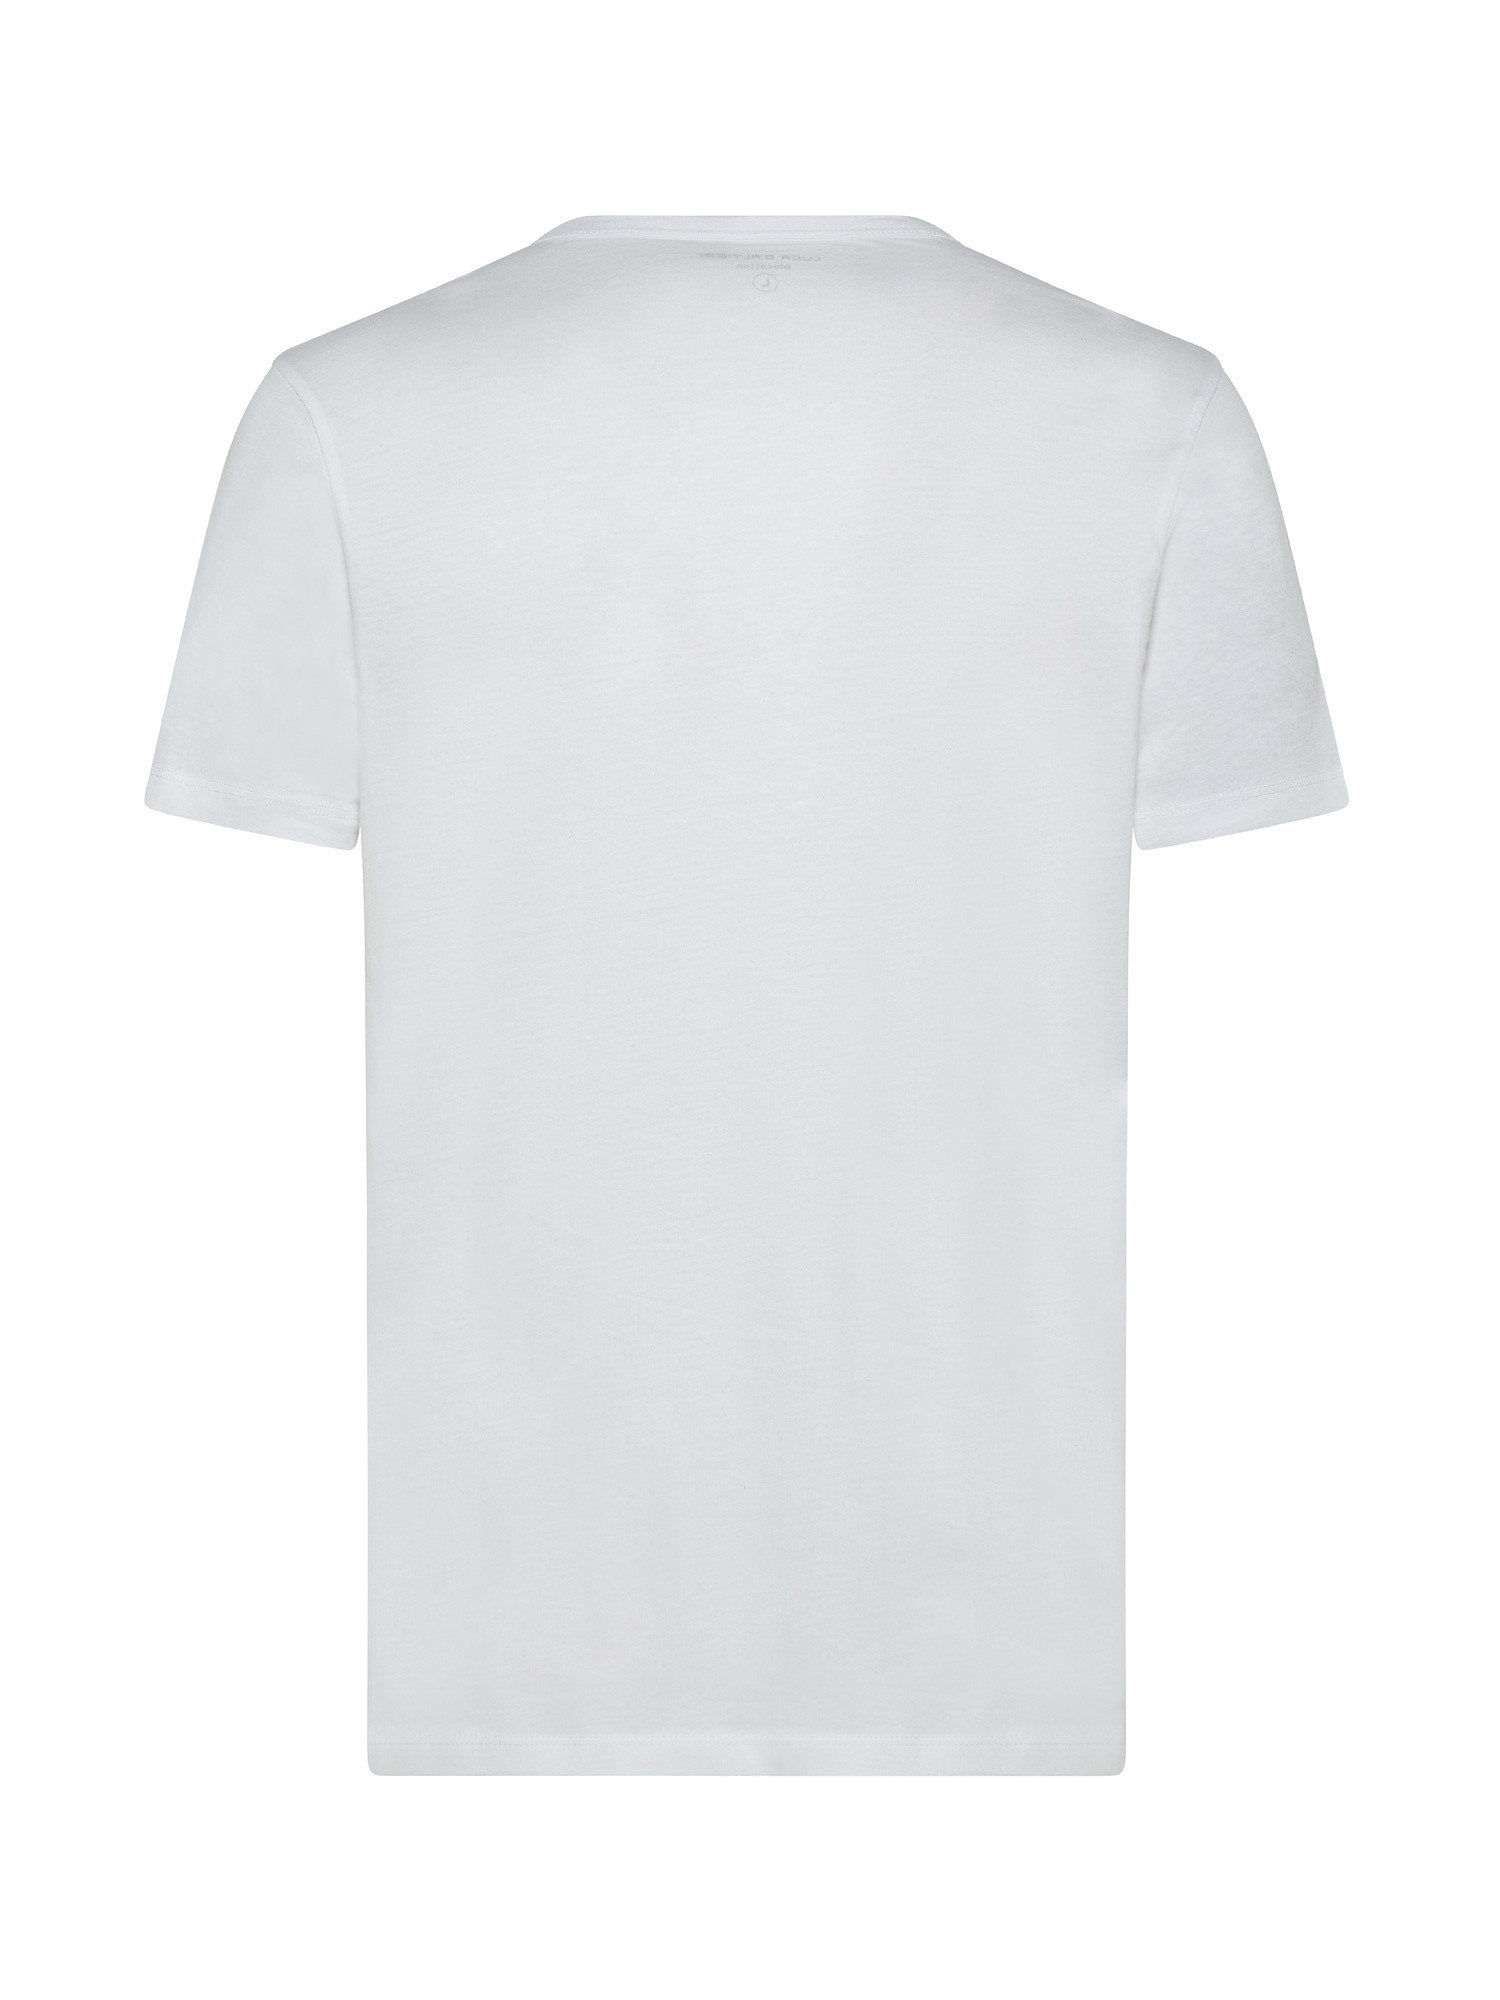 Set da 2 t-shirt, Bianco, large image number 1